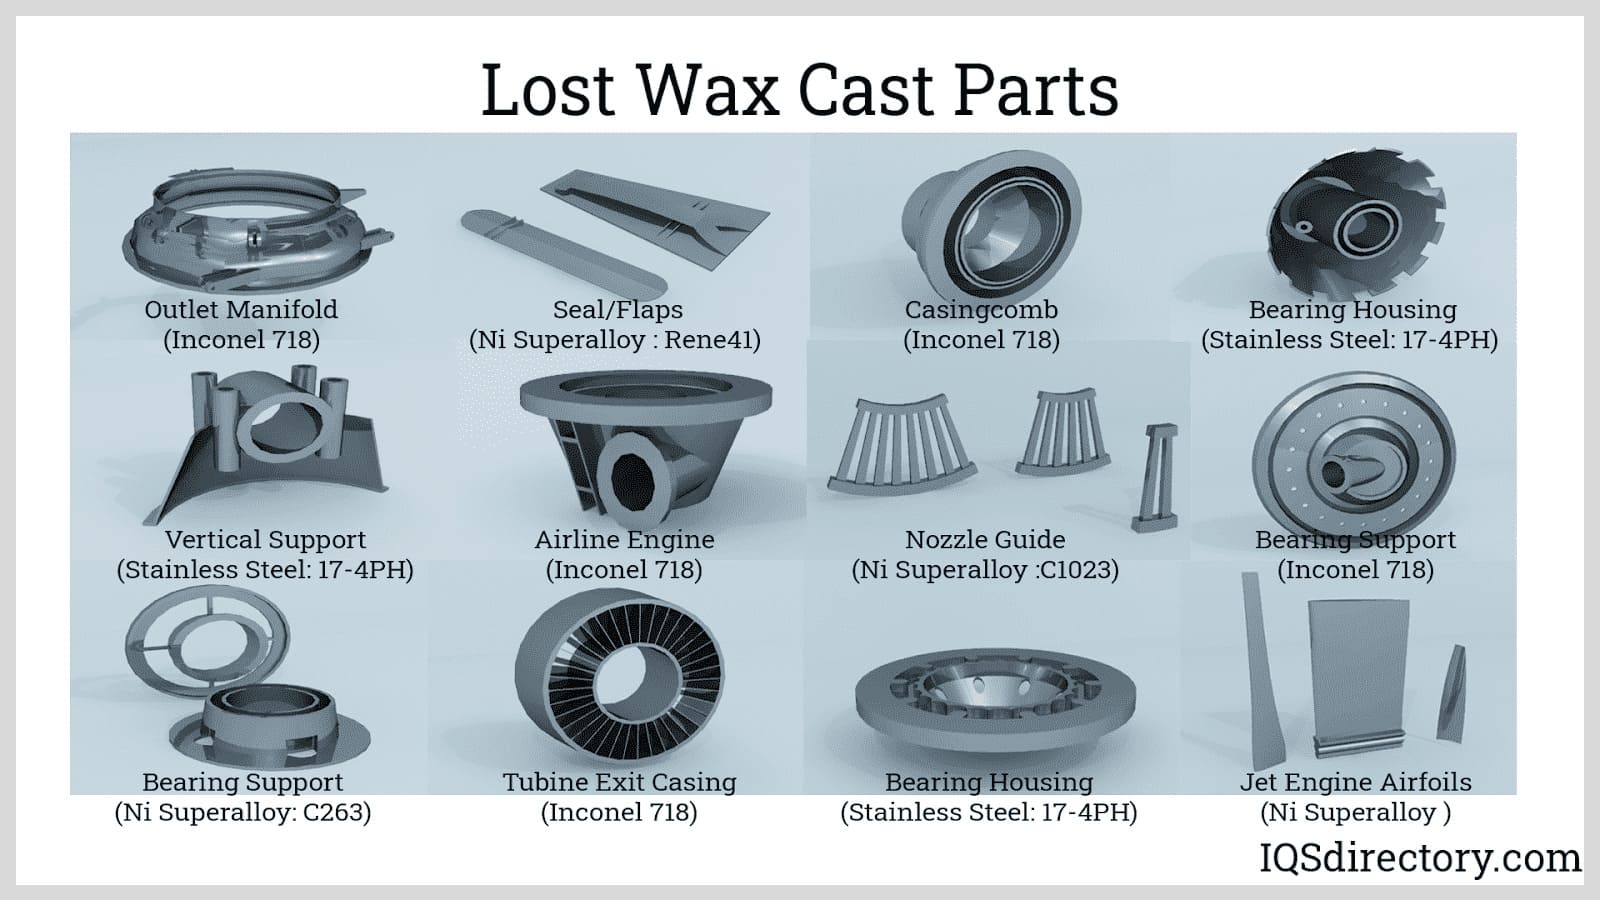 Lost Wax Cast Parts